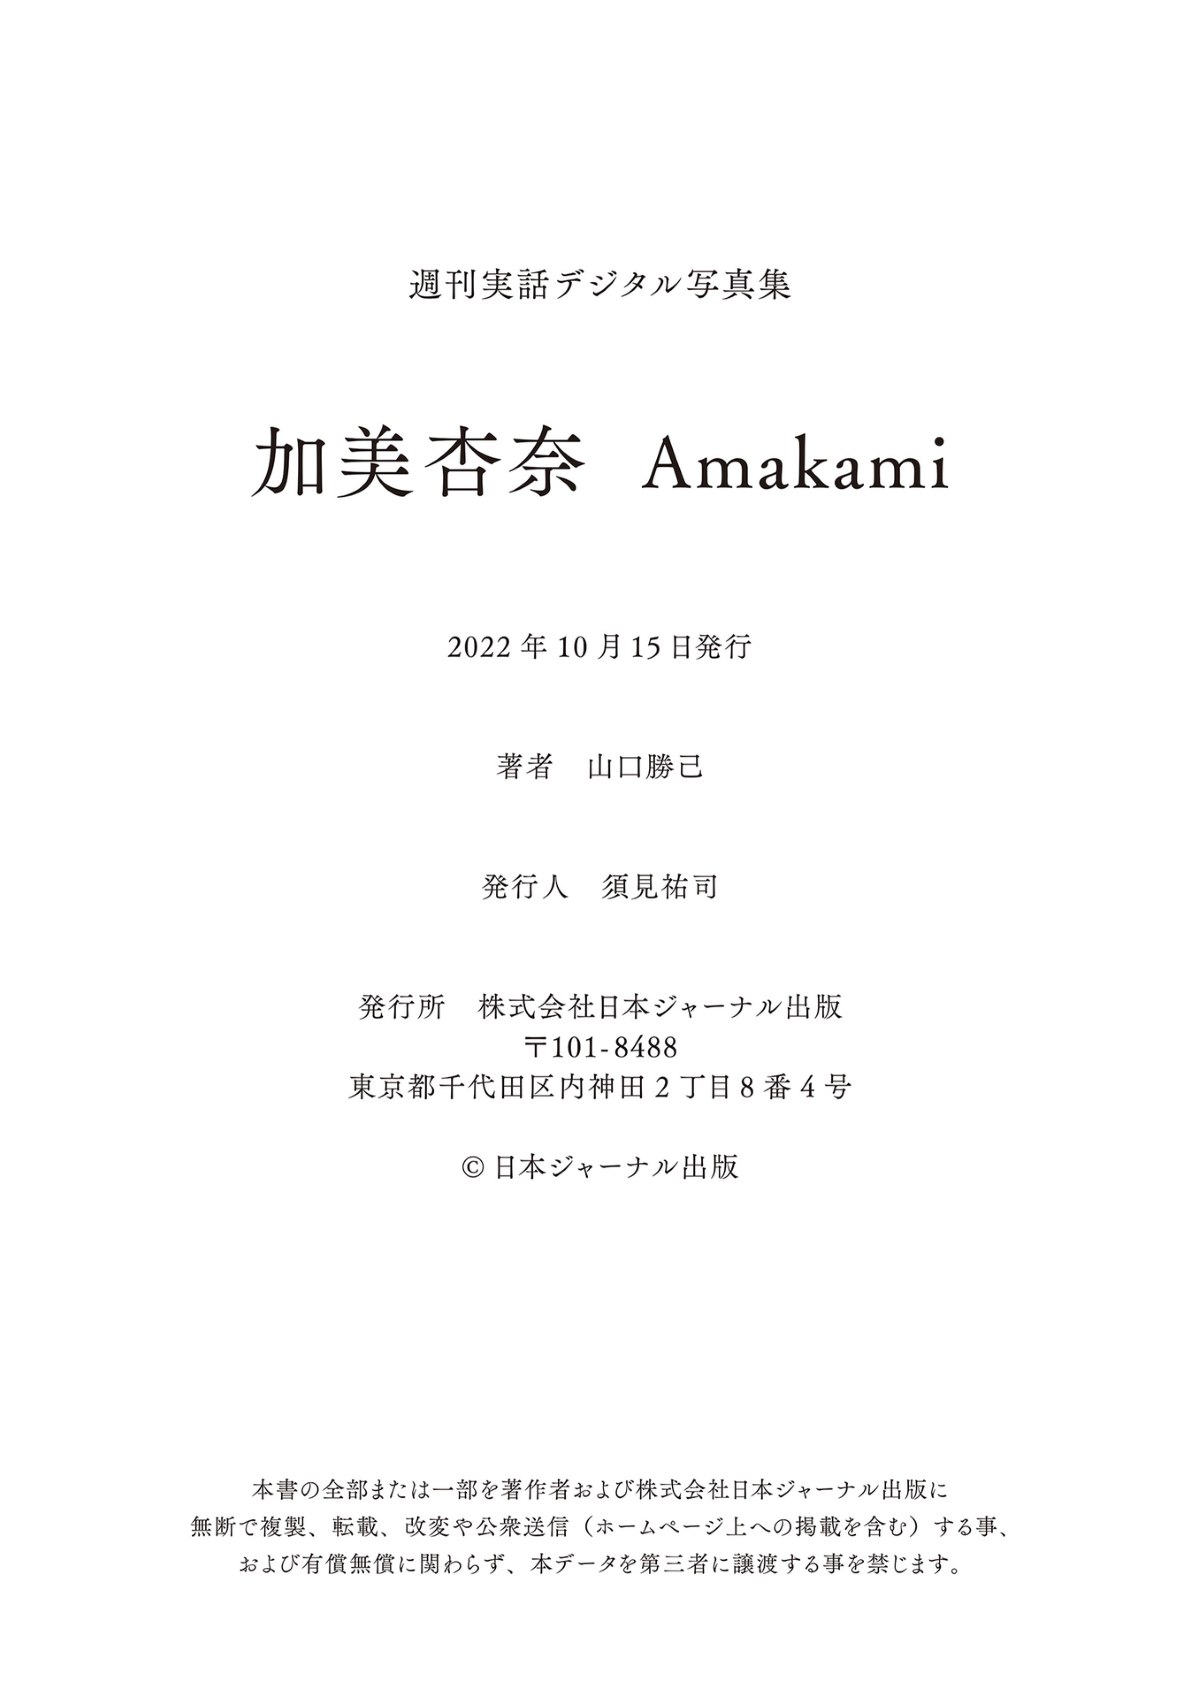 Photobook 2022 11 04 Anna Kami 加美杏奈 Amakami 0072 6735914348.jpg